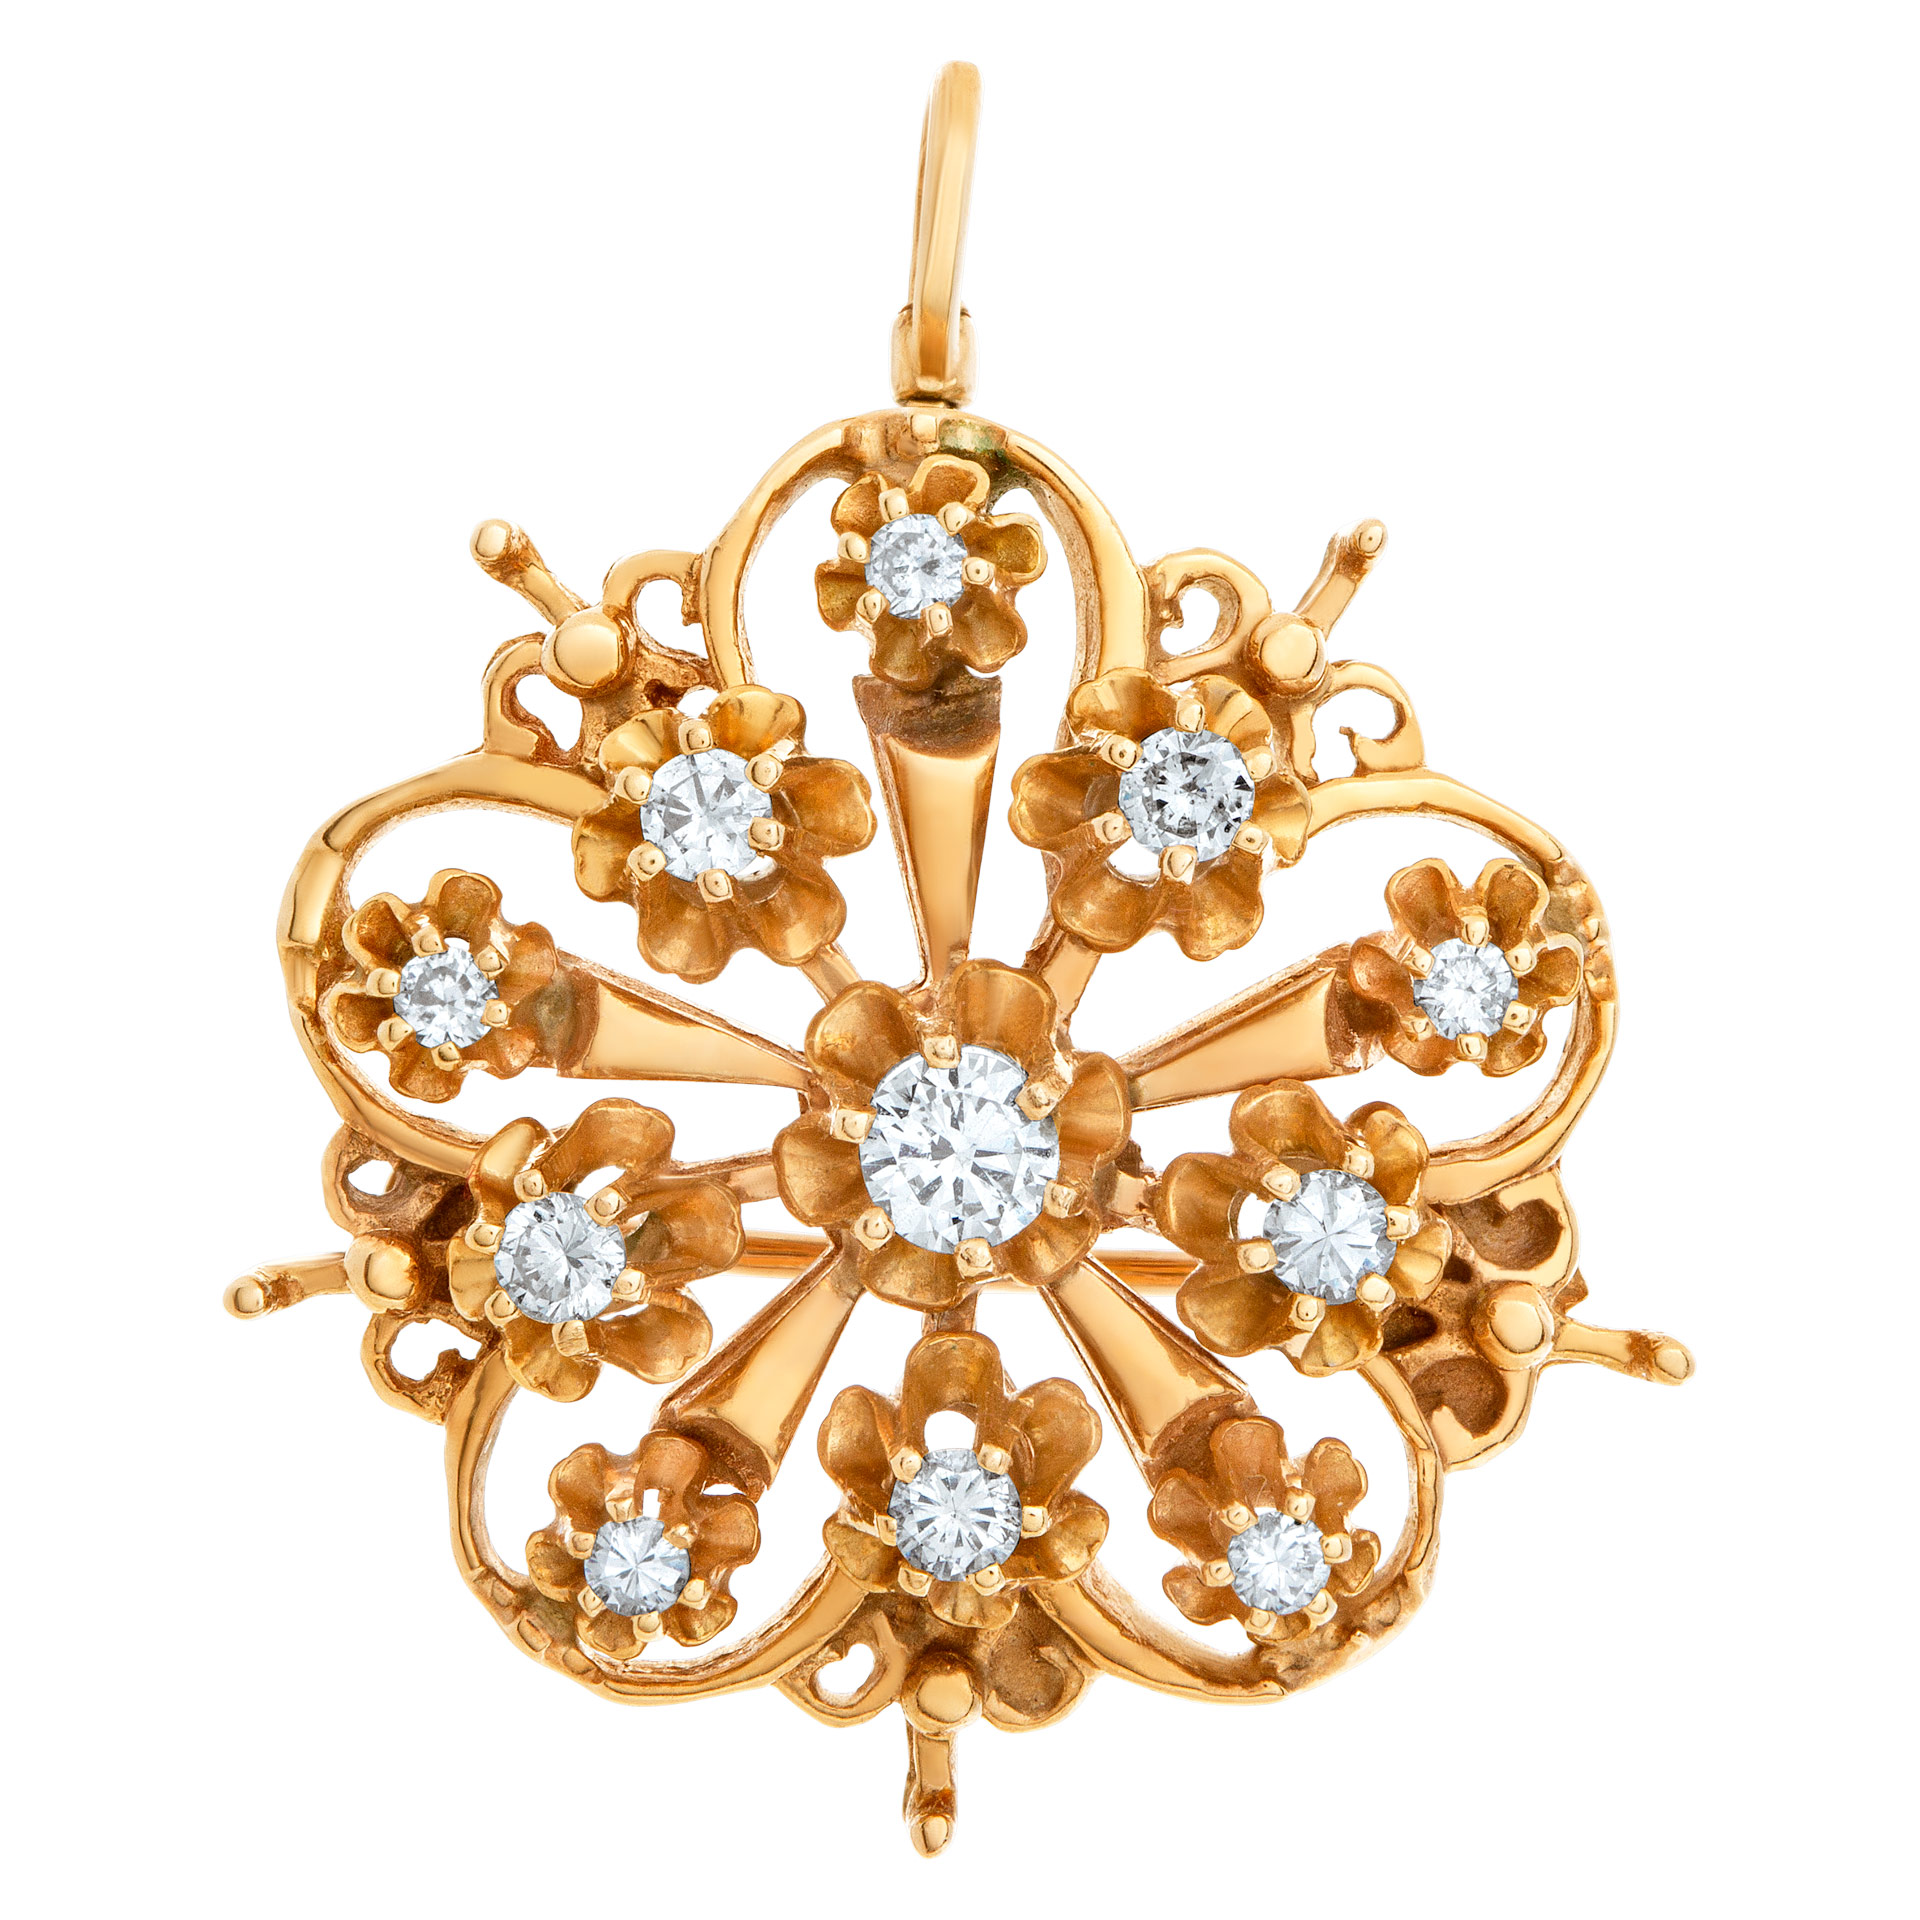 Floral Bouquet pin/pendant with 11diamonds